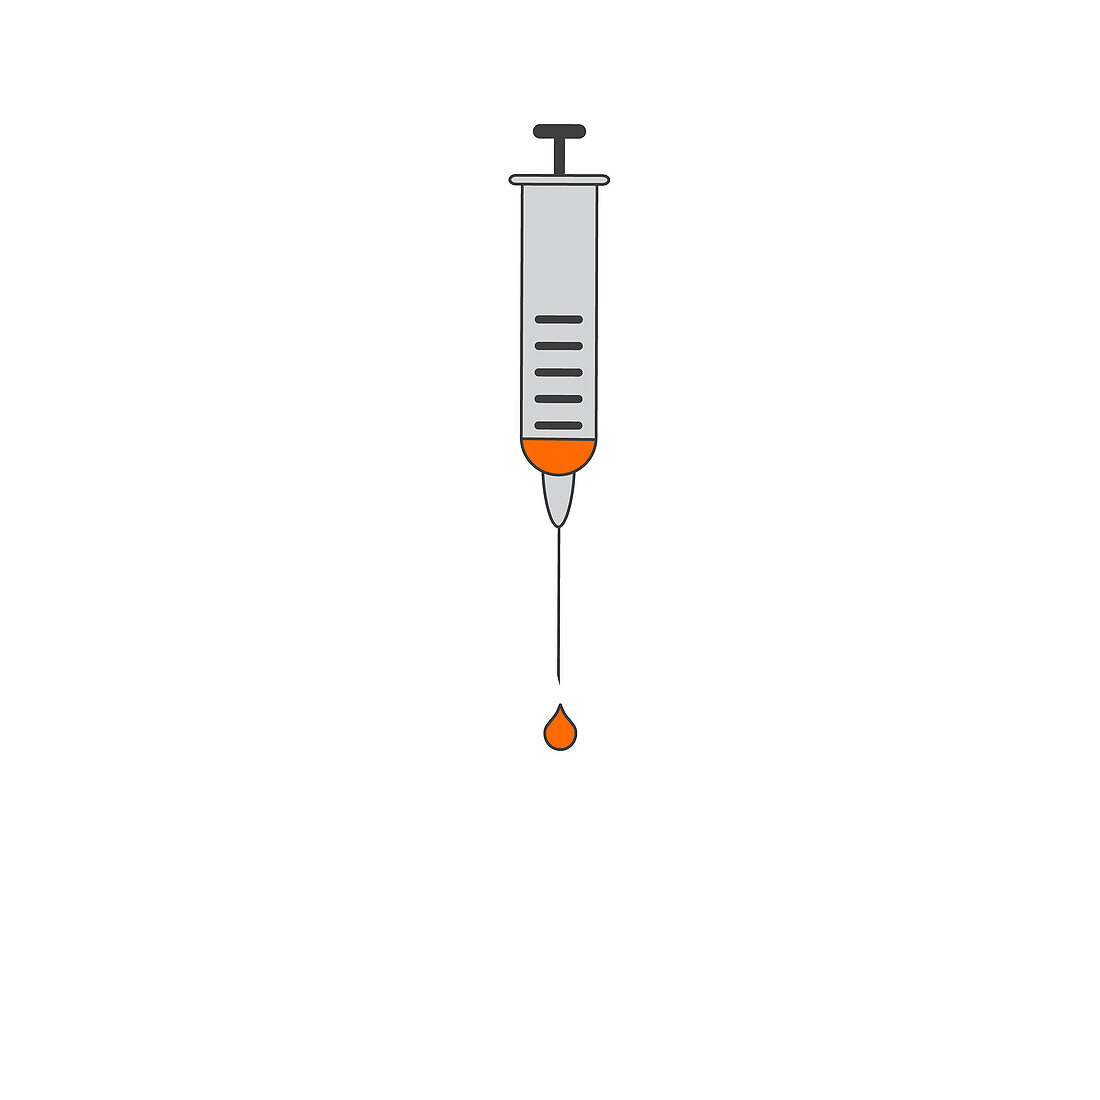 Platelet rich plasma injection, conceptual illustration